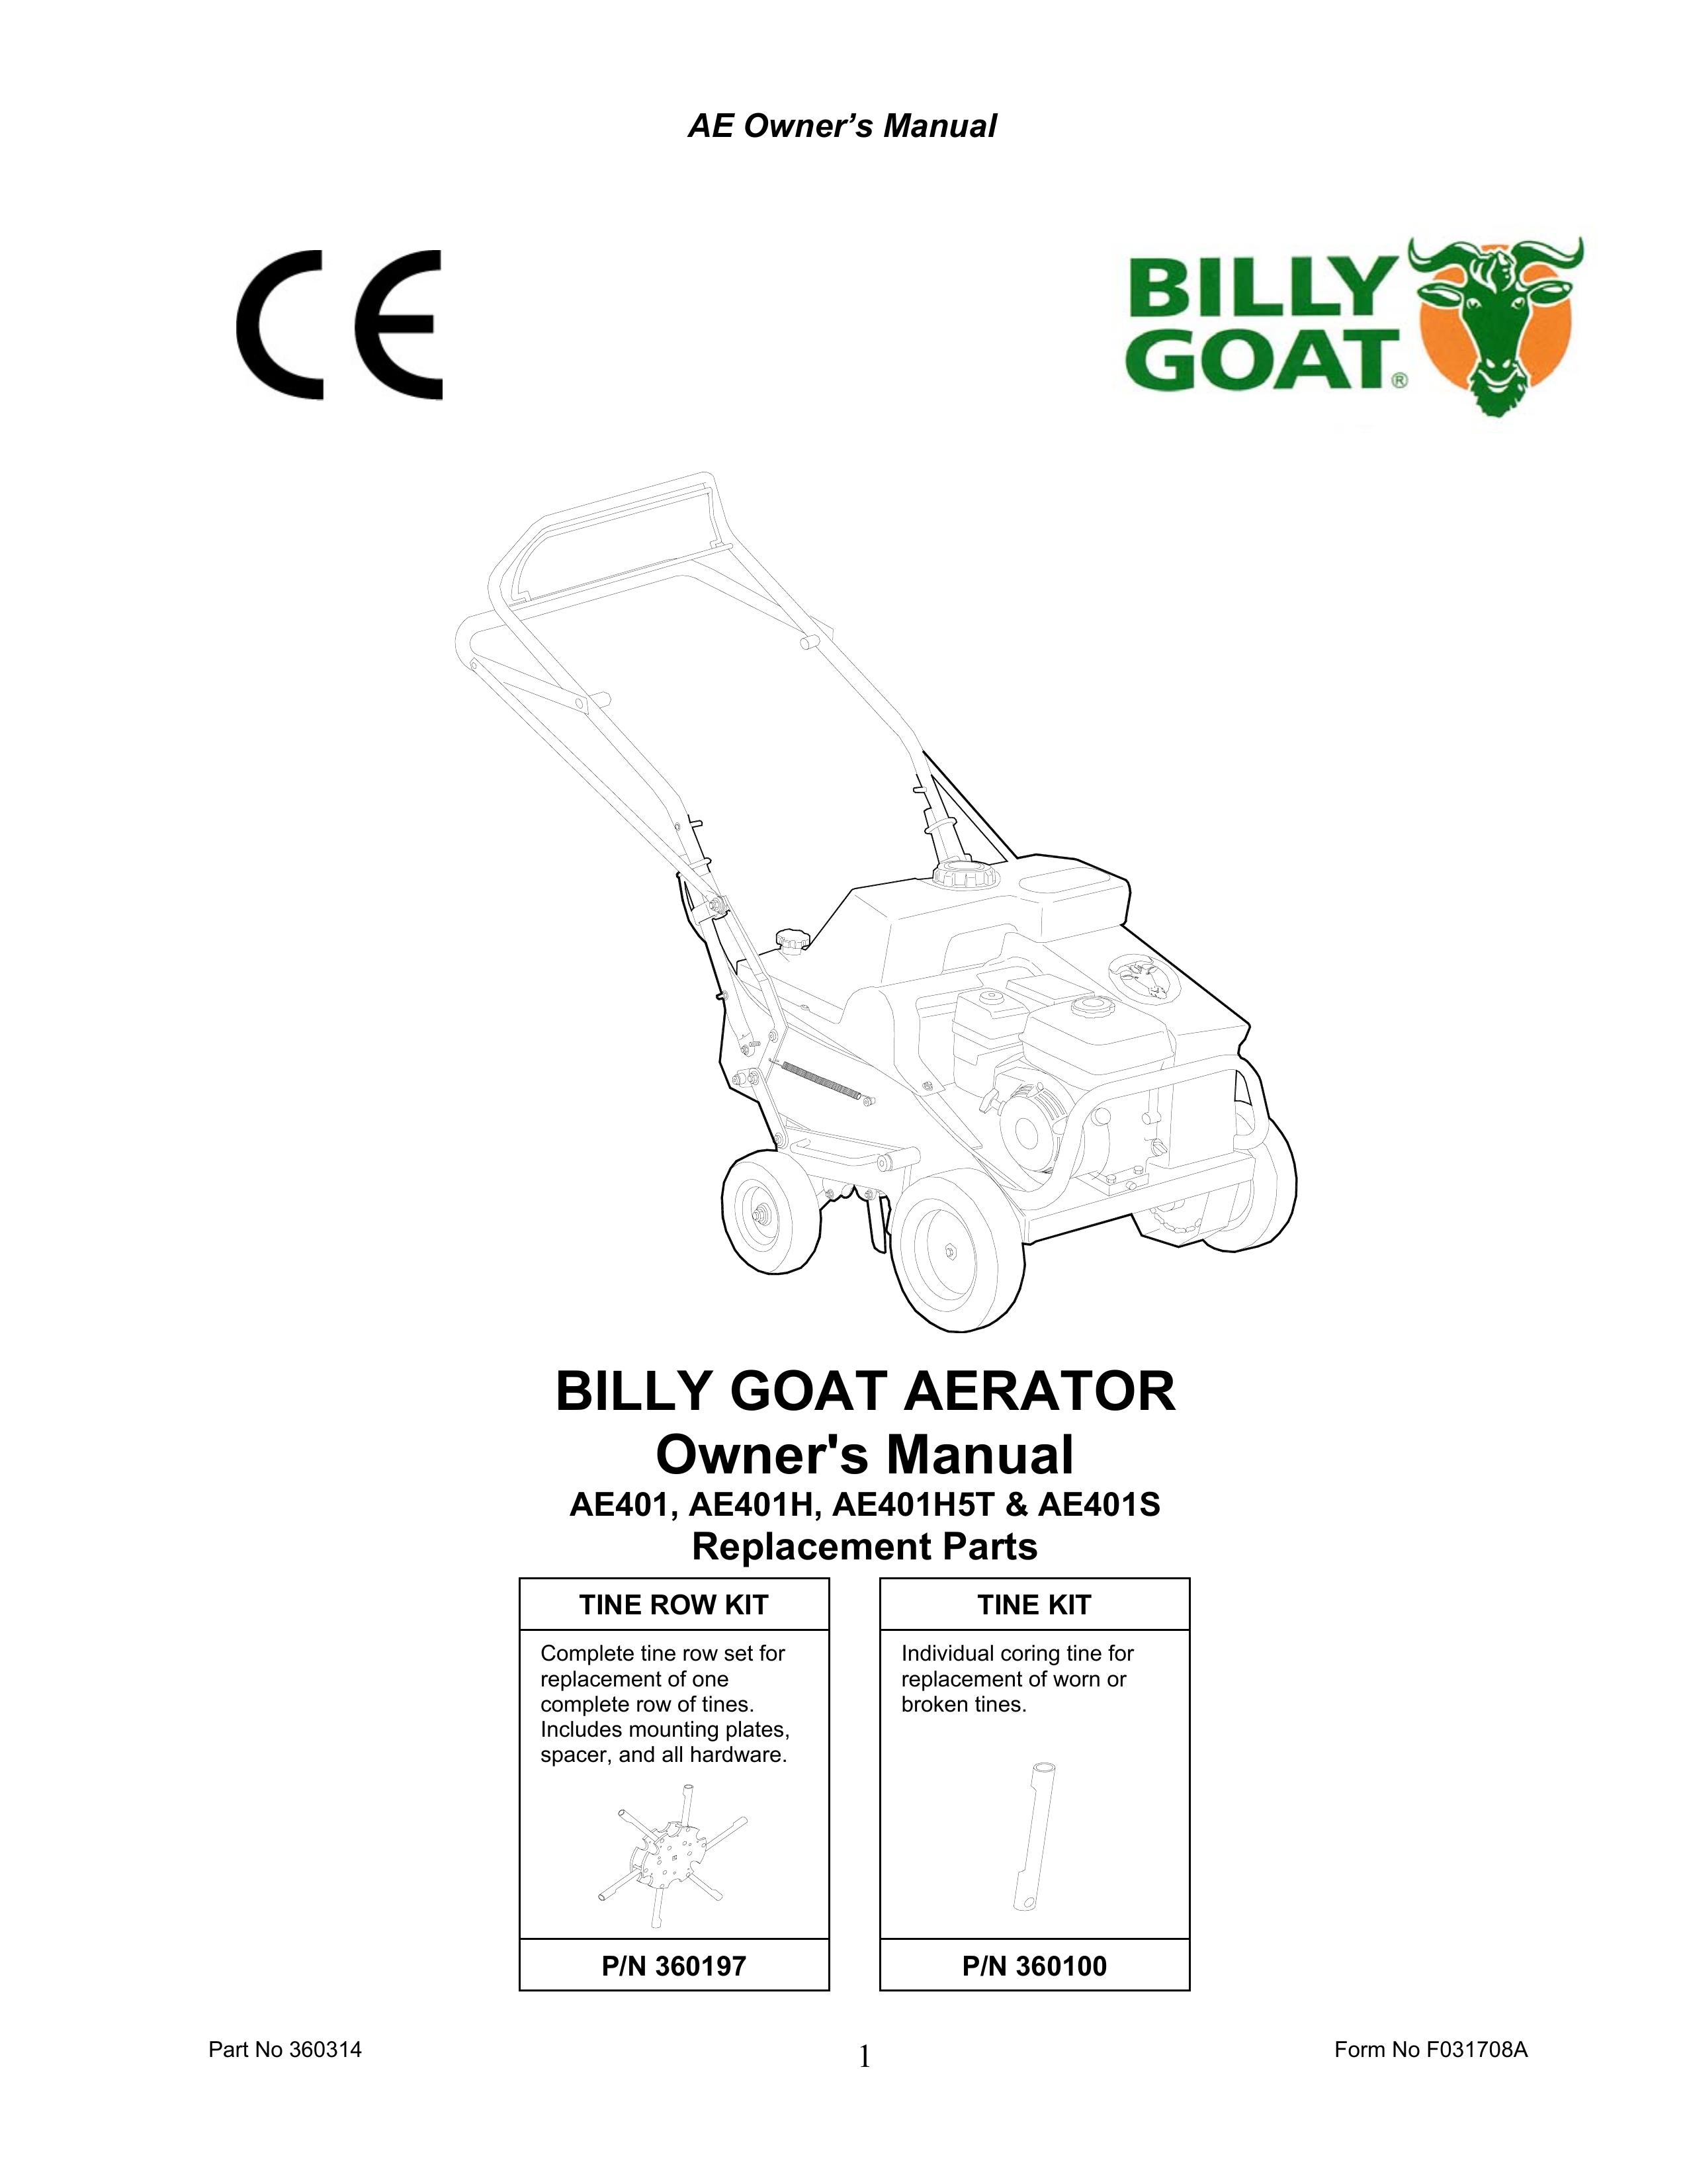 Billy Goat AE401H Lawn Aerator User Manual